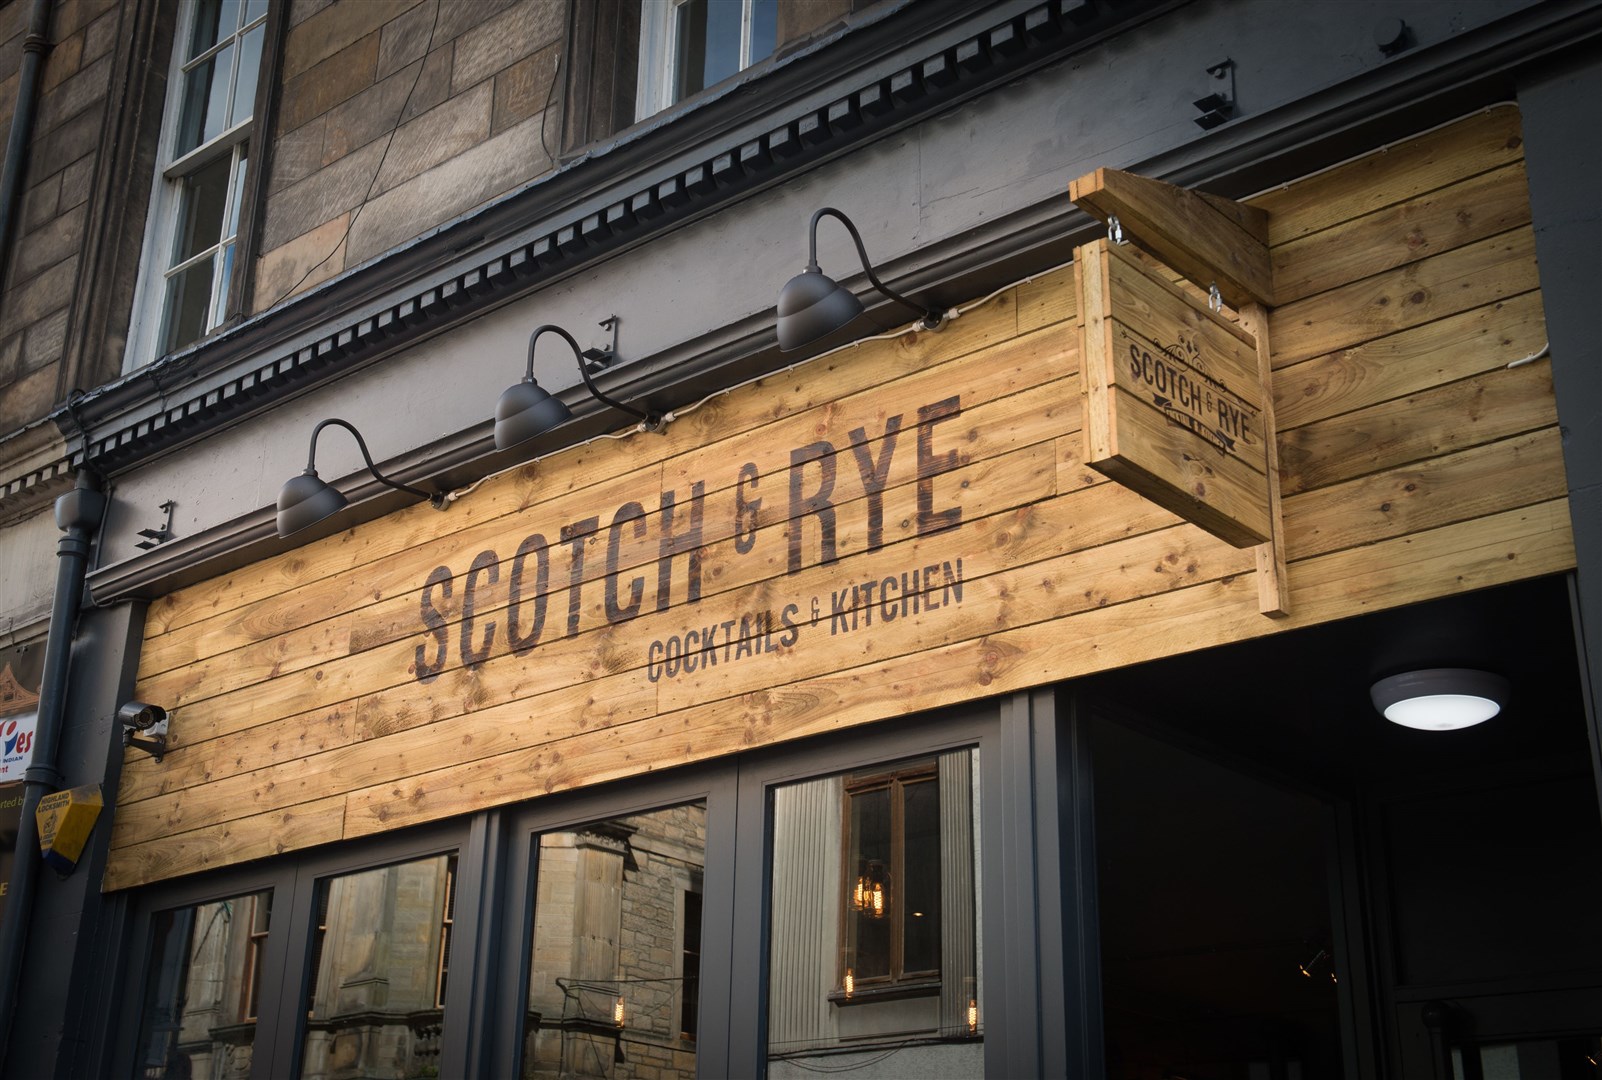 Scotch & Rye.